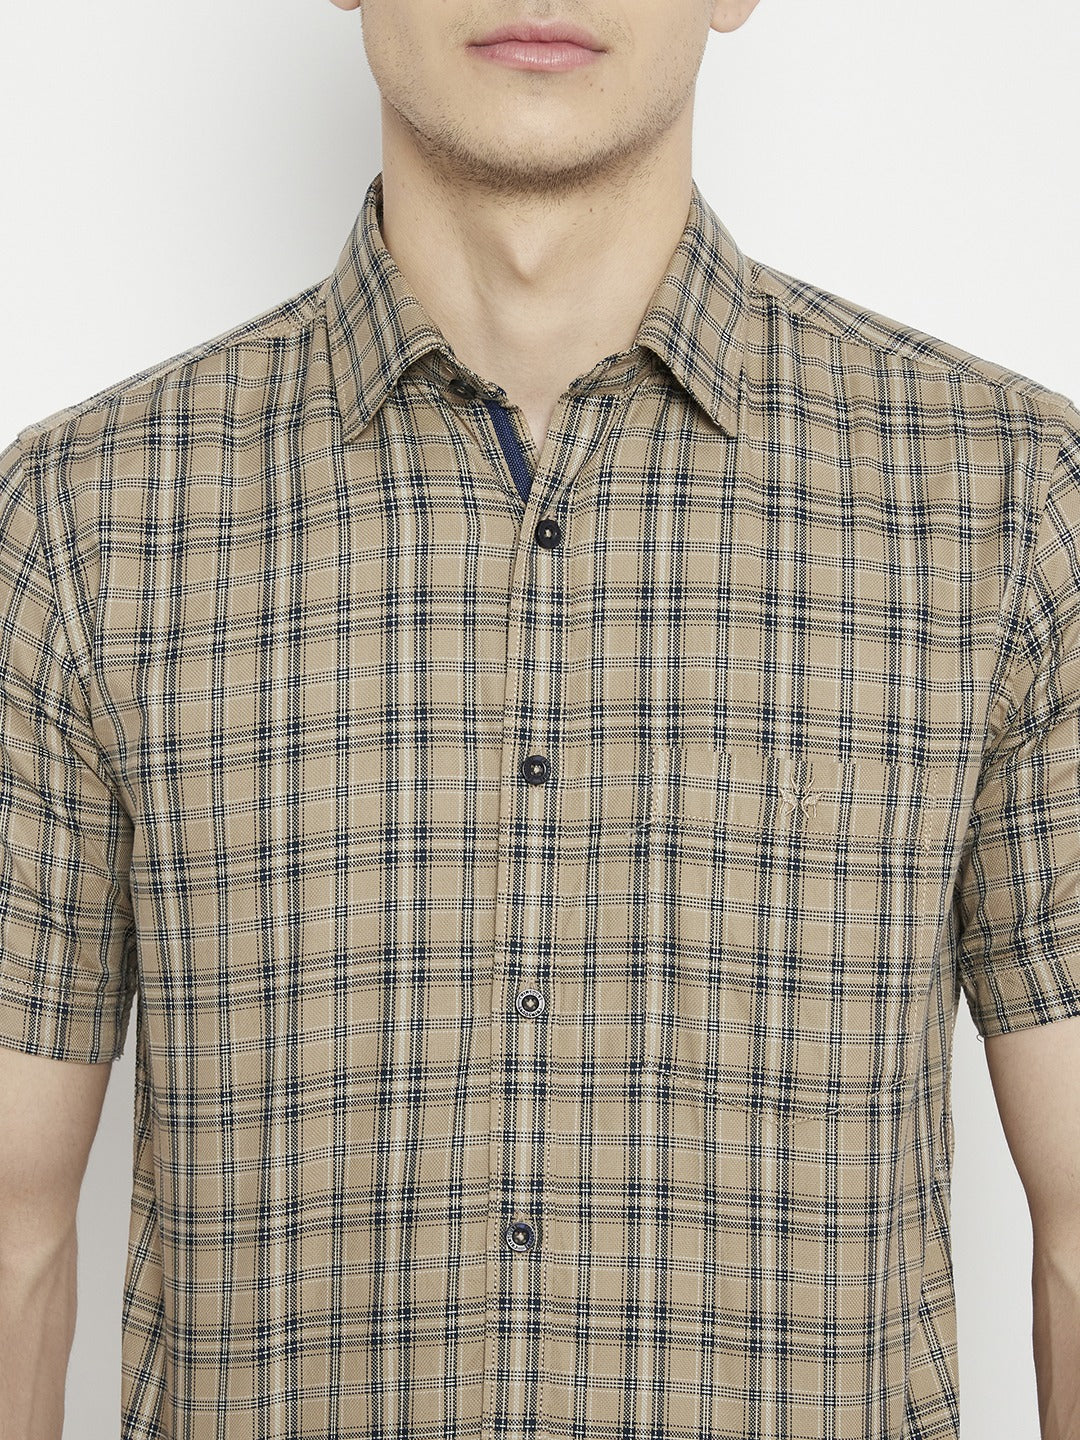 Beige Checked Slim Fit shirt - Men Shirts